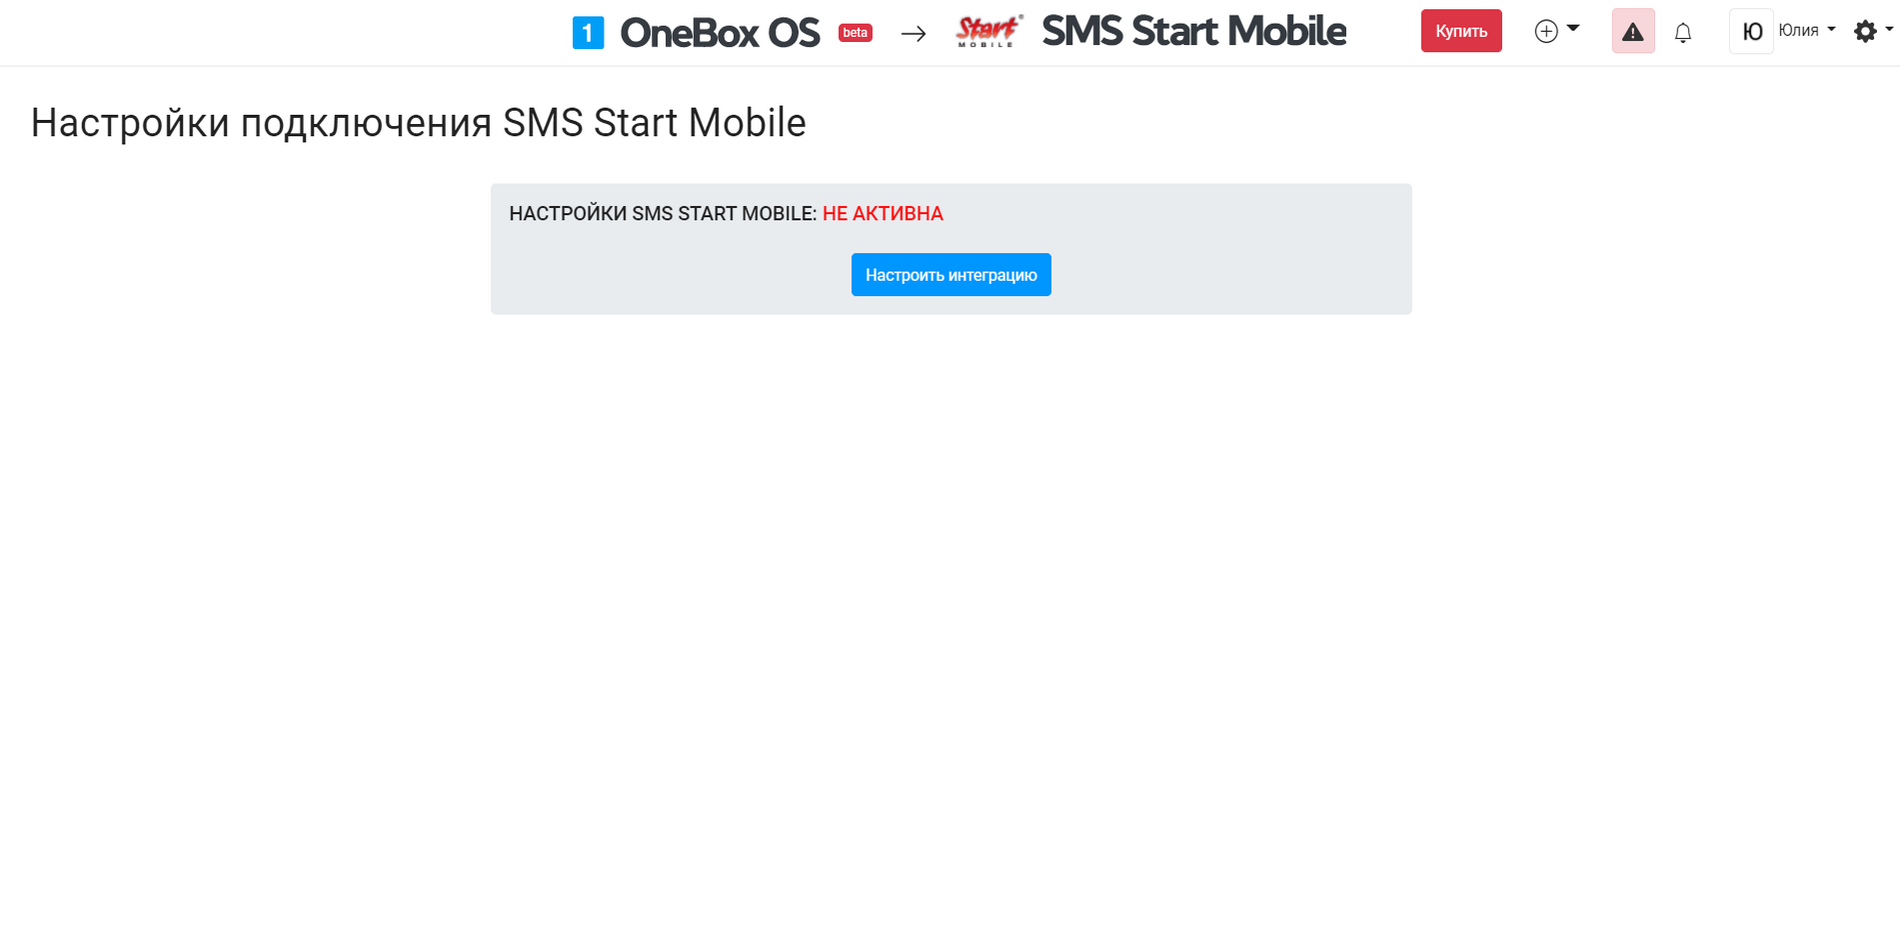 Application SMS Start Mobile